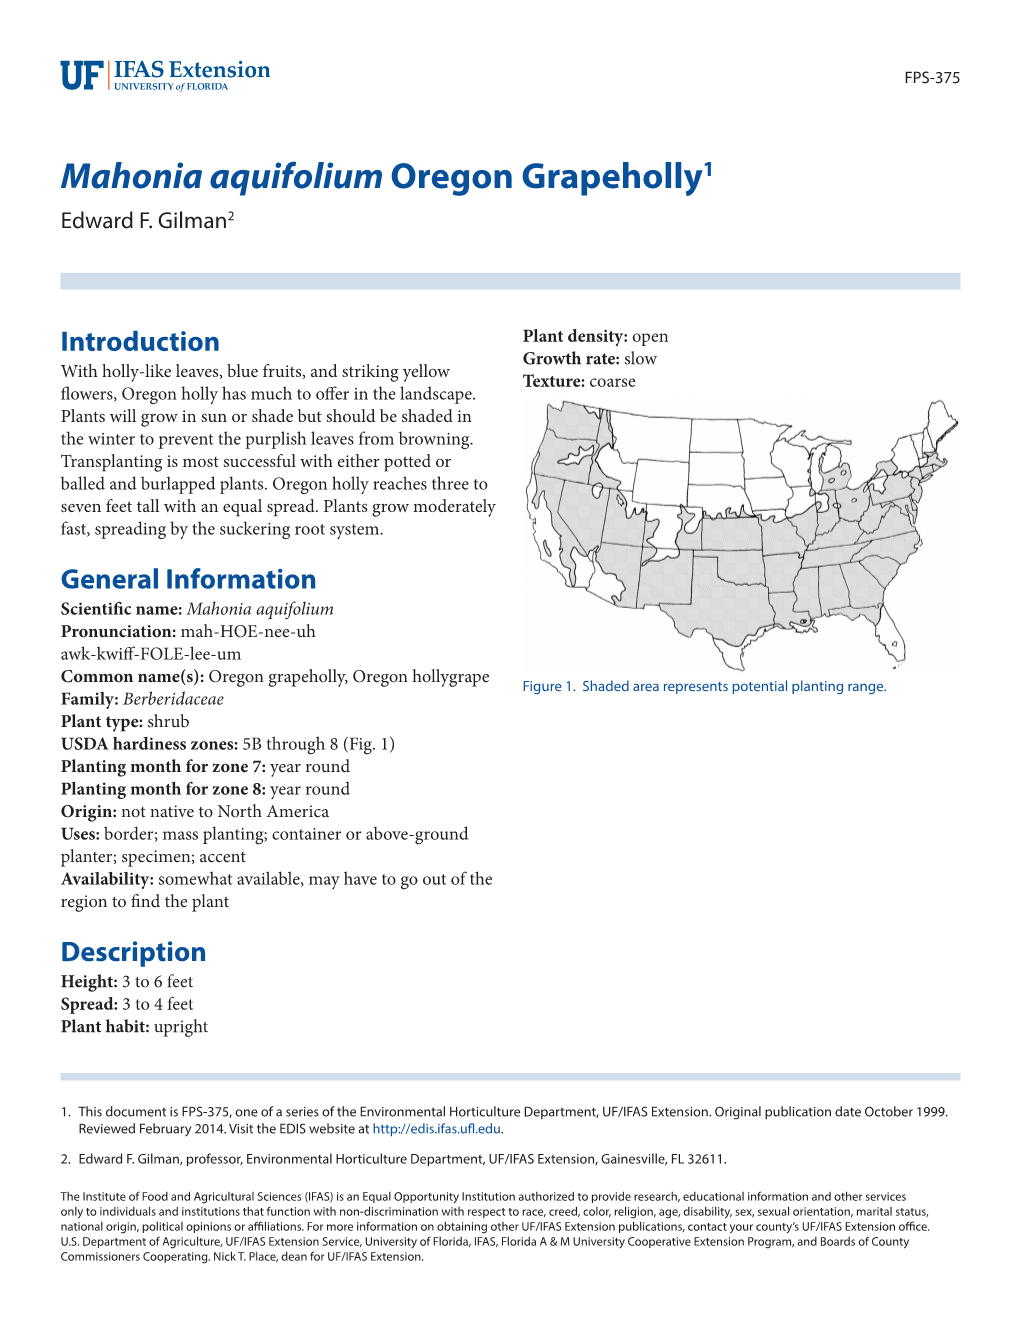 Mahonia Aquifolium Oregon Grapeholly1 Edward F